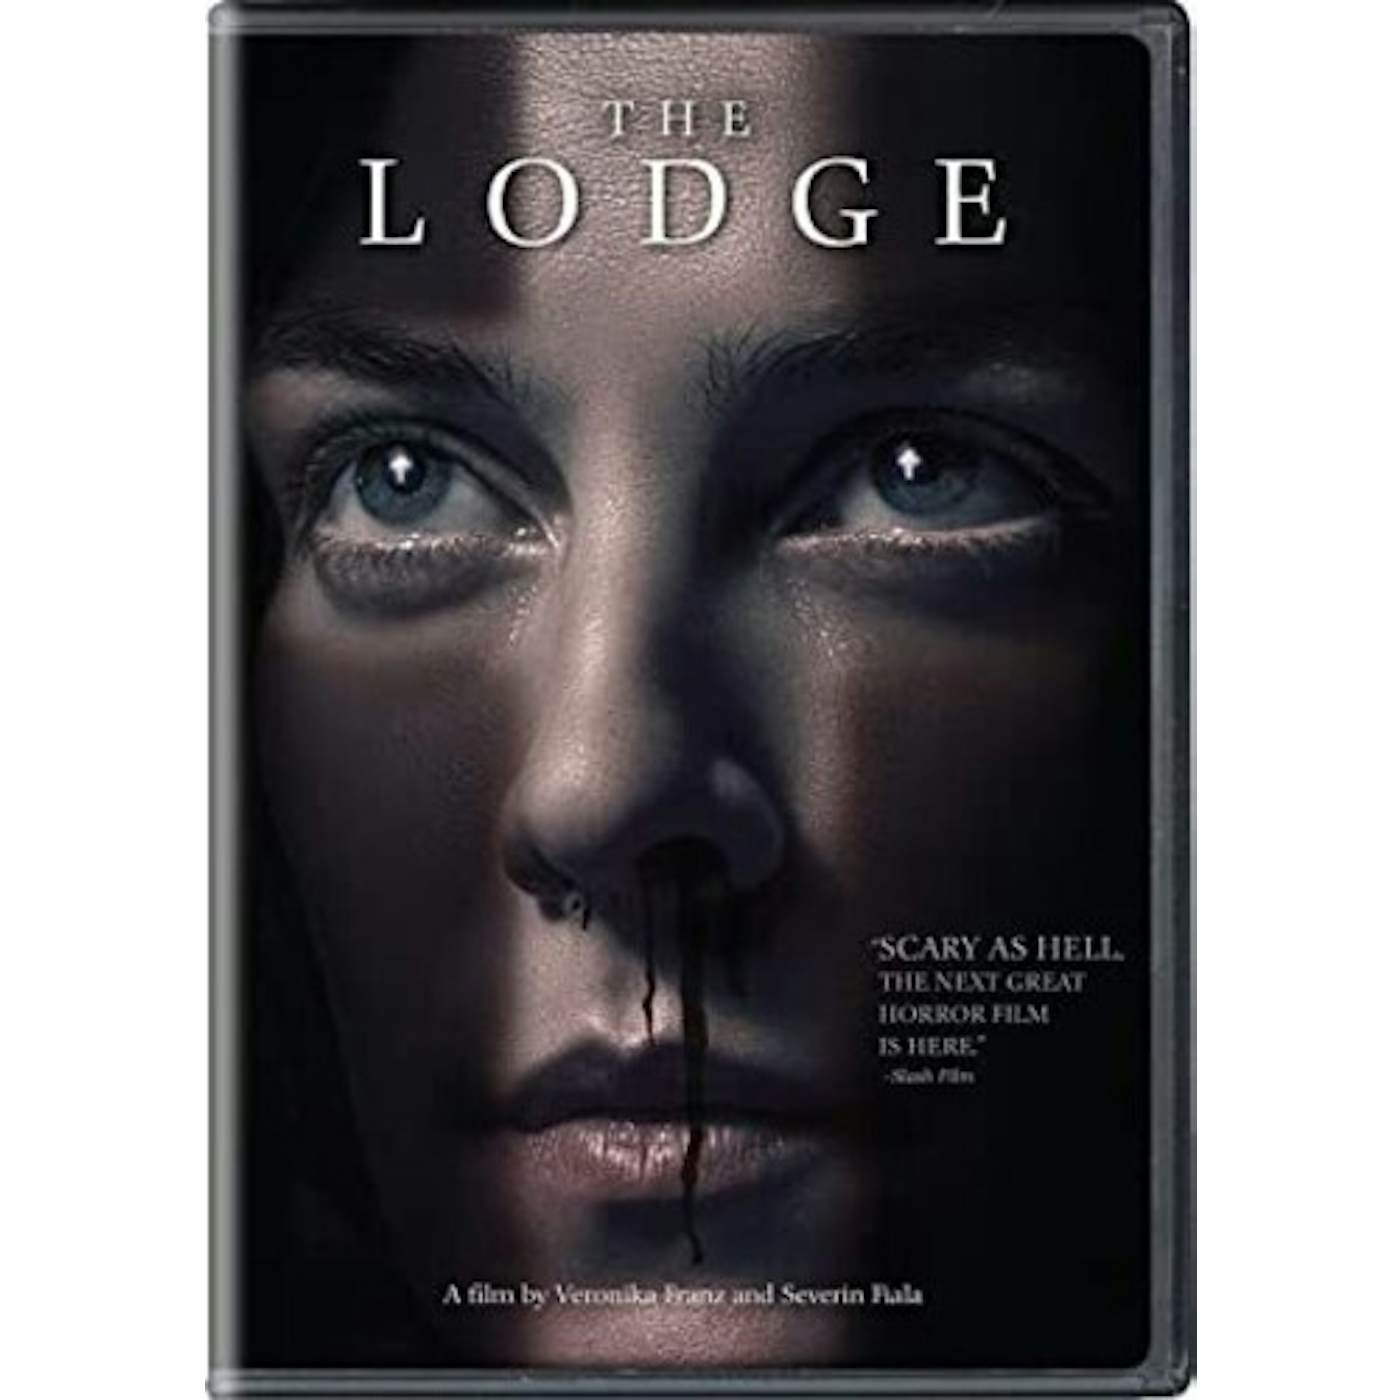 LODGE DVD